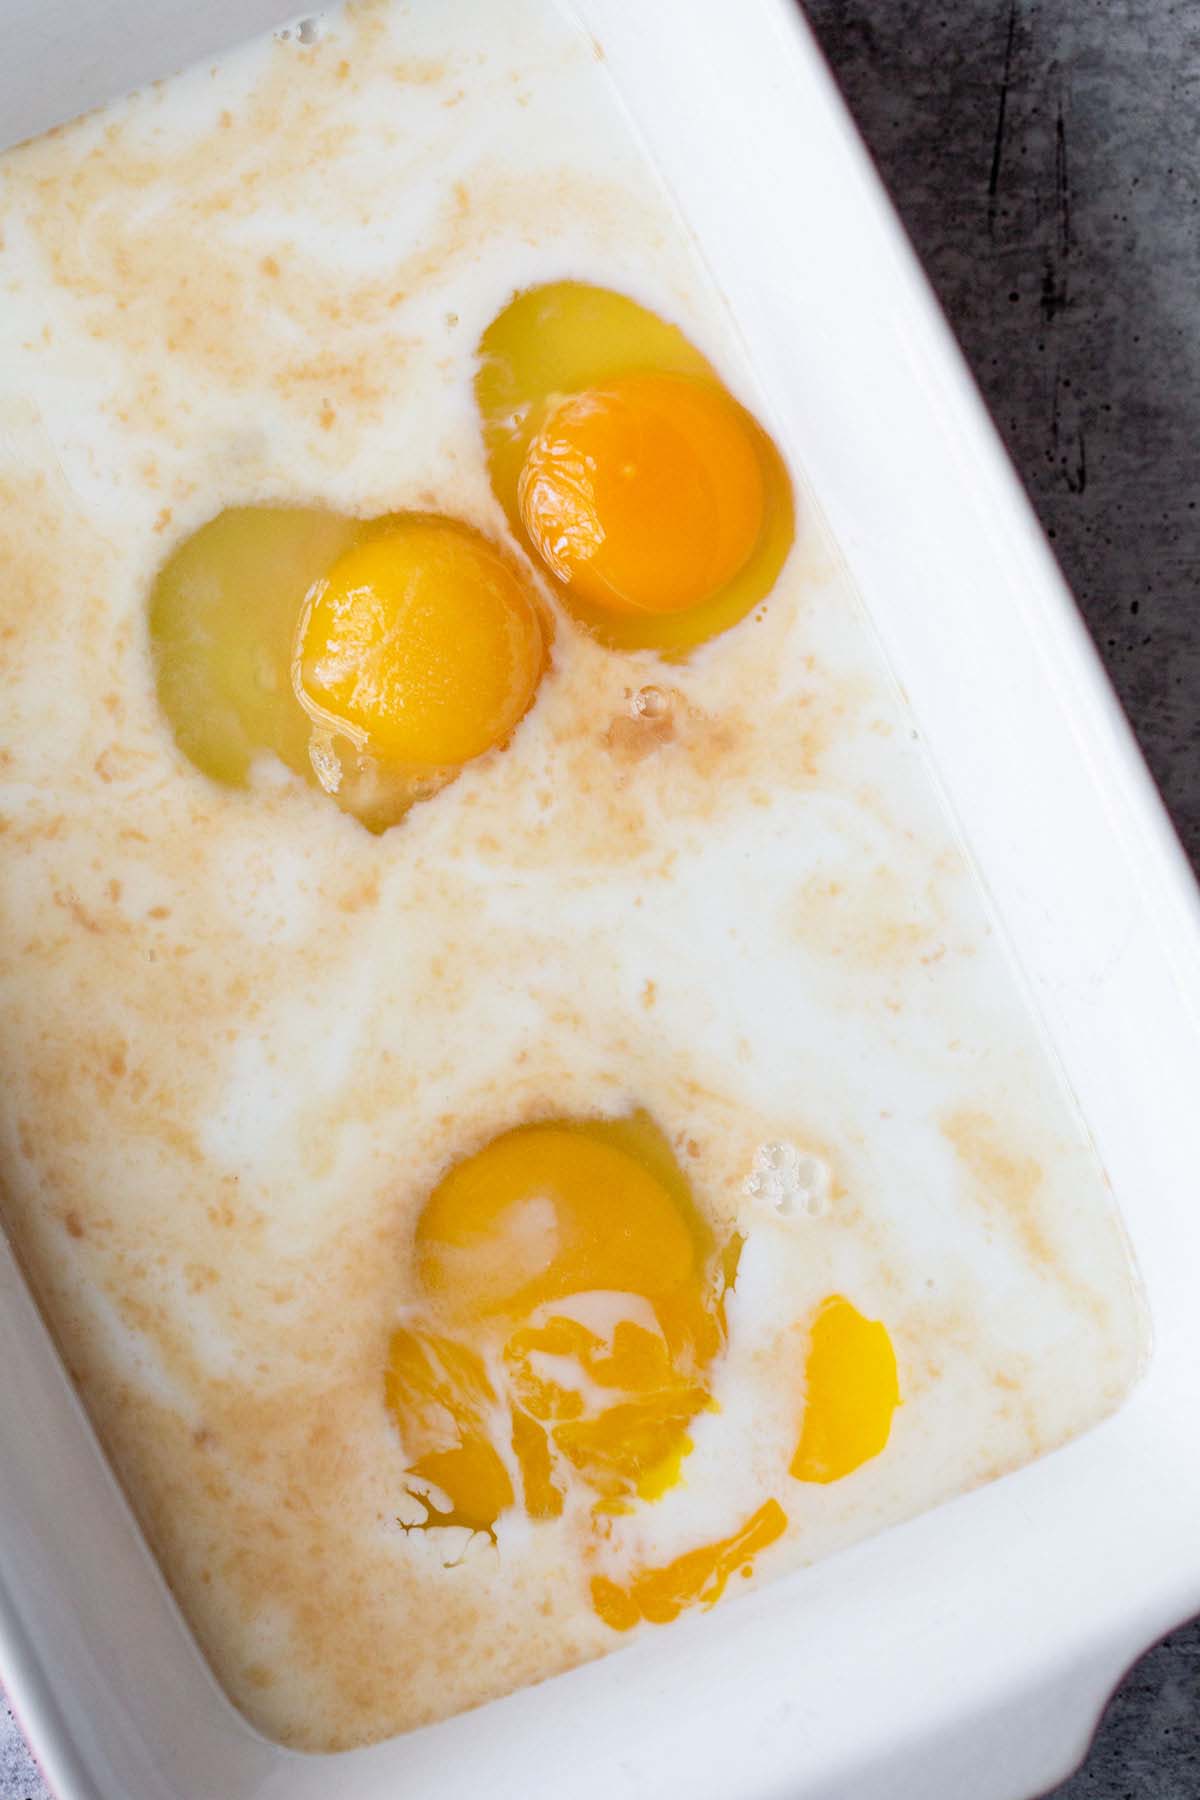 Eggs and milk in a casserole dish.